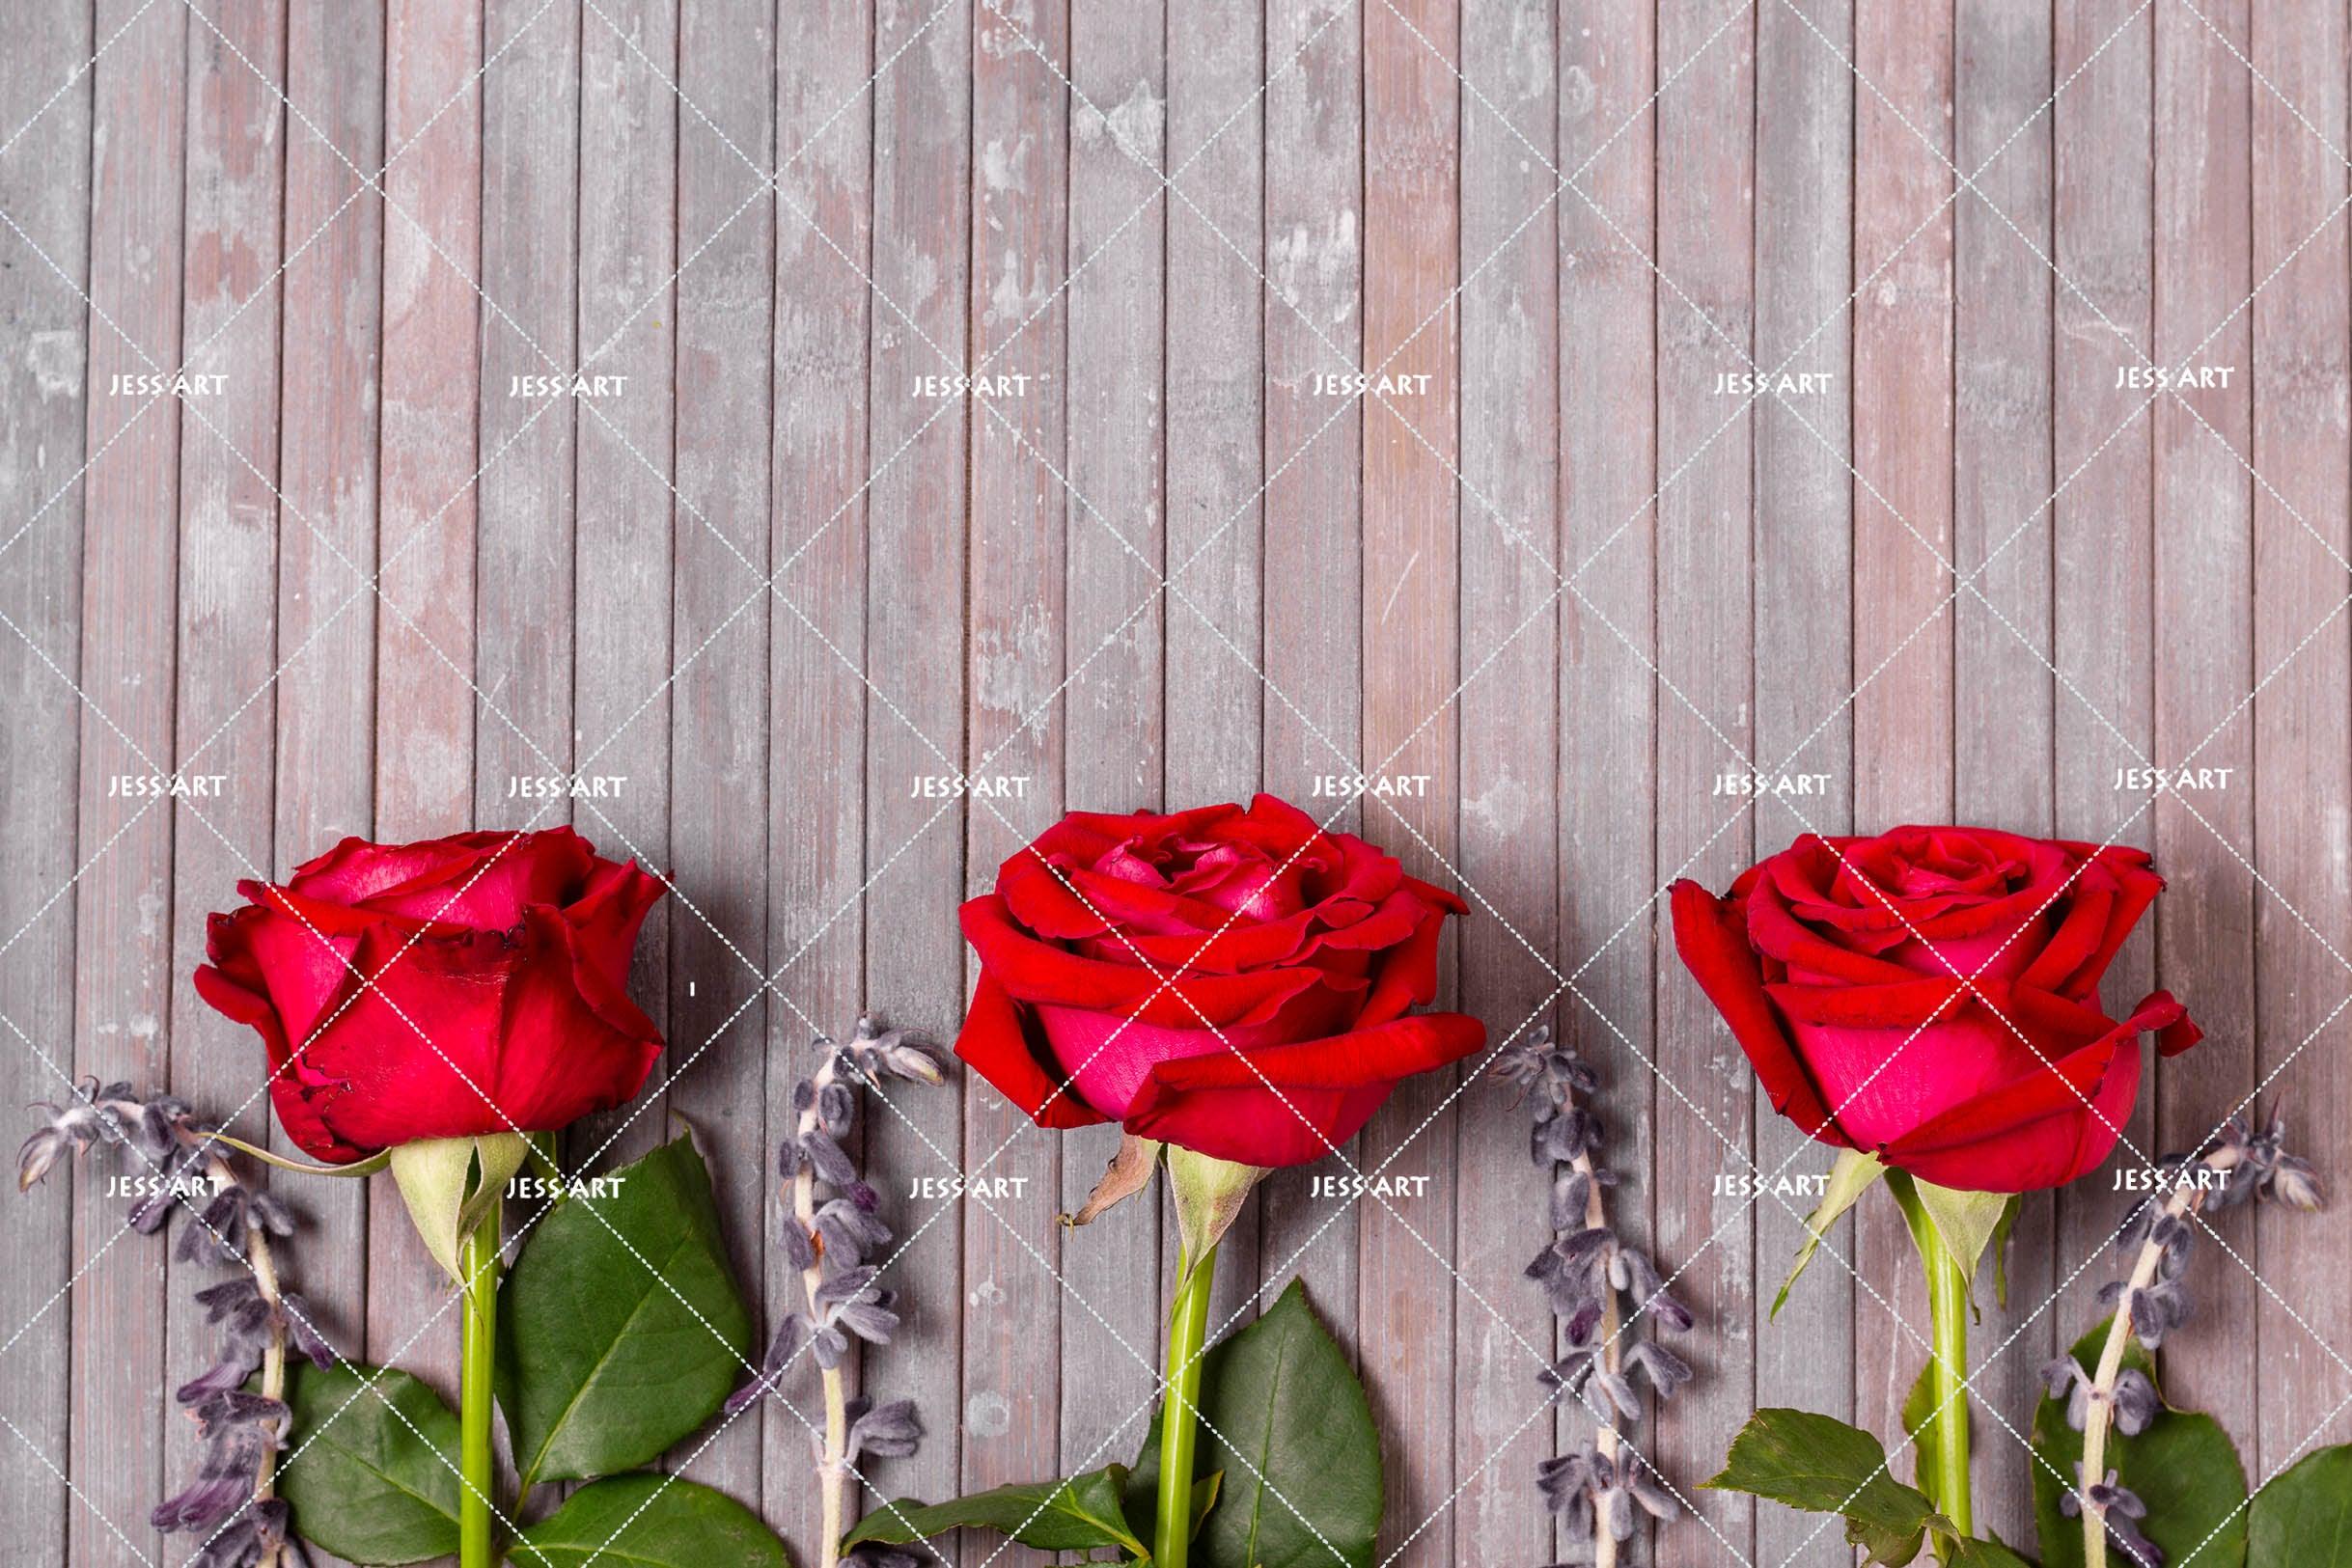 3D red rose flowers background wall mural wallpaper 40- Jess Art Decoration